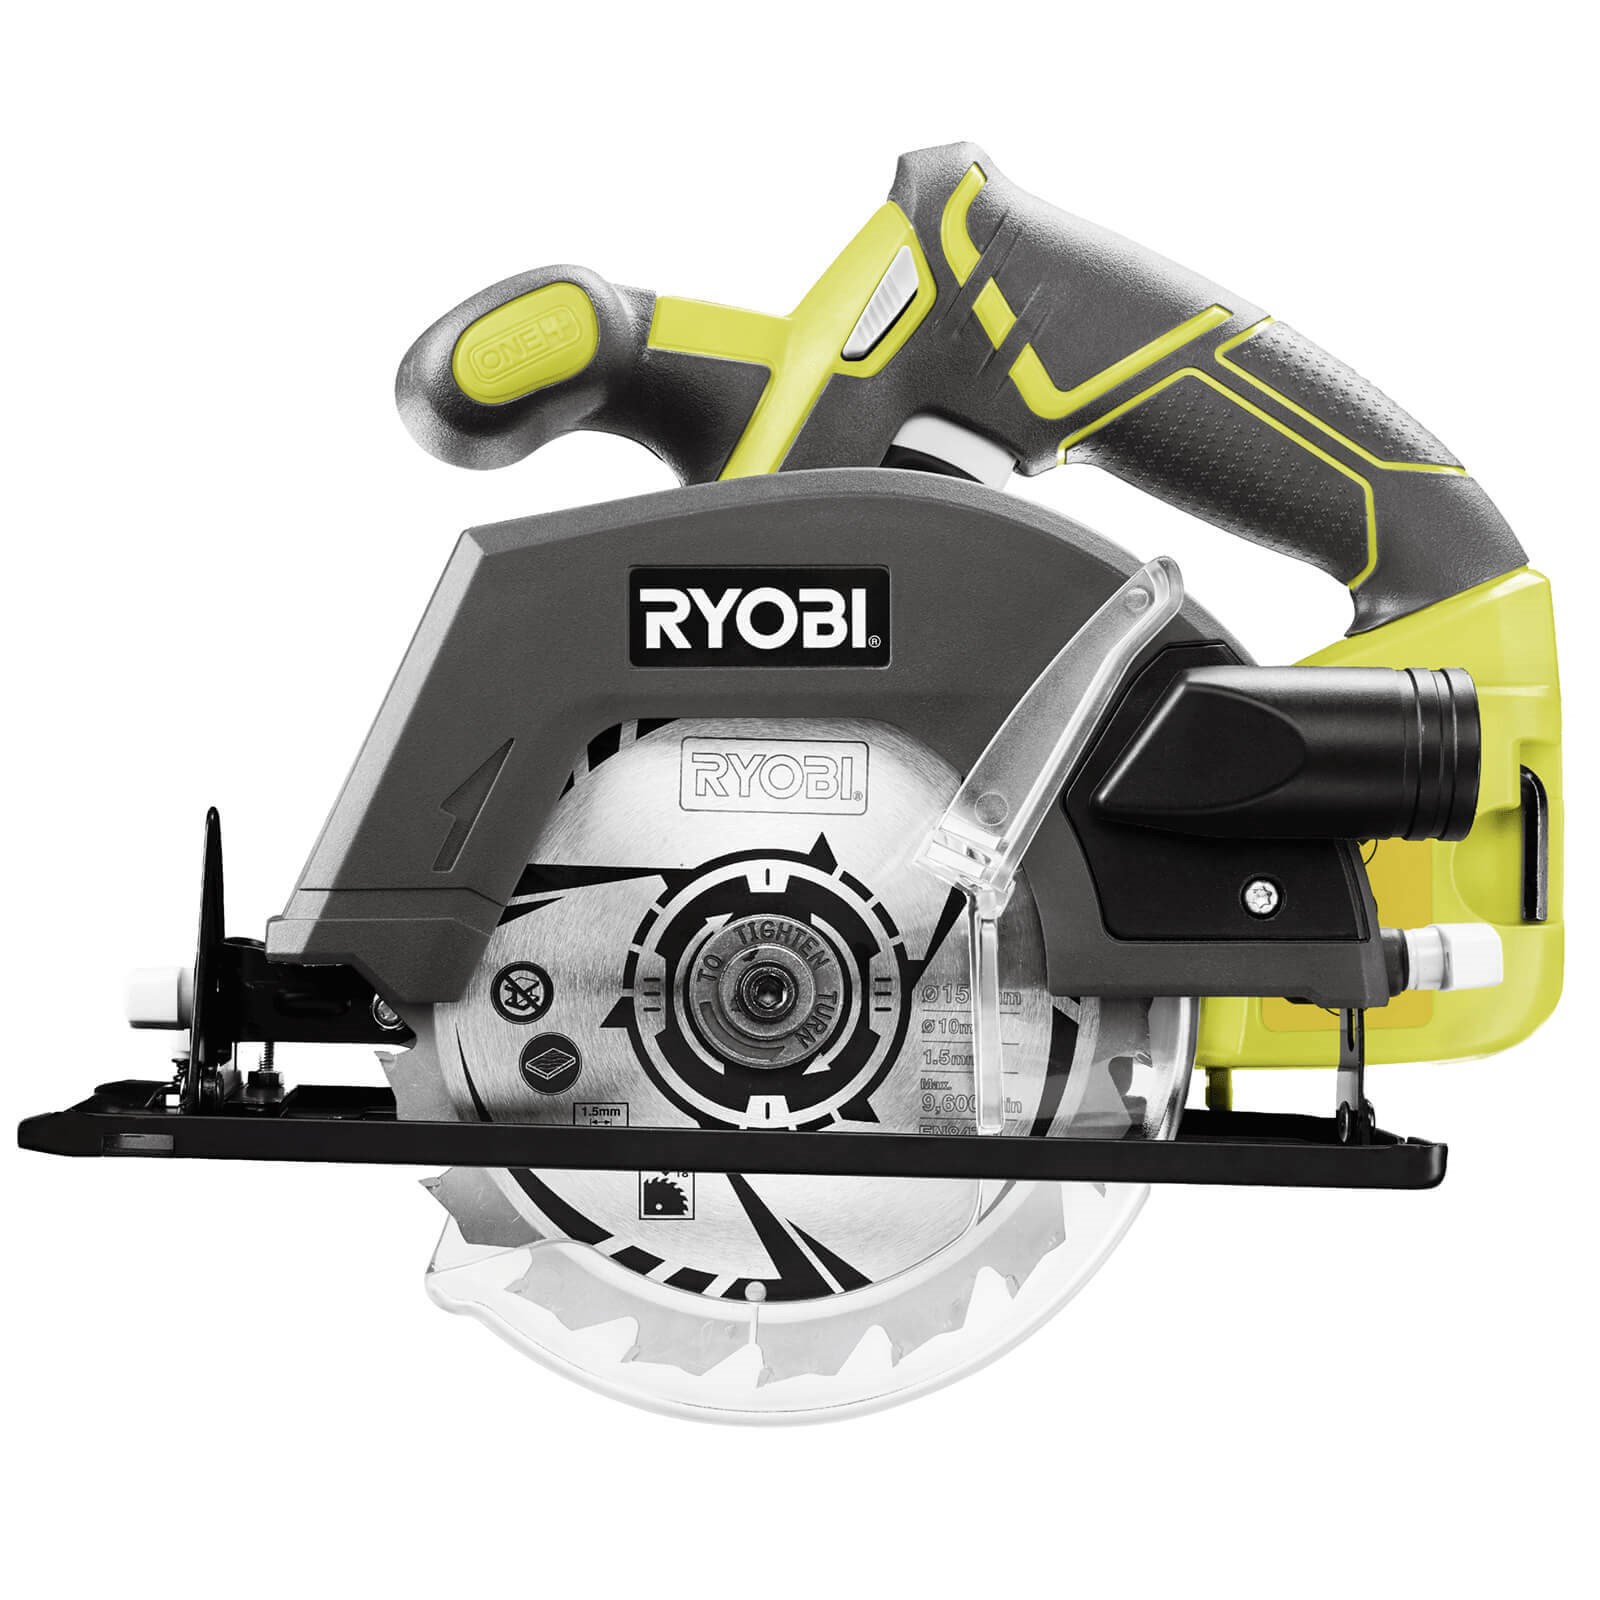 Ryobi R18CSP Cordless Circular Saw 150mm Circular